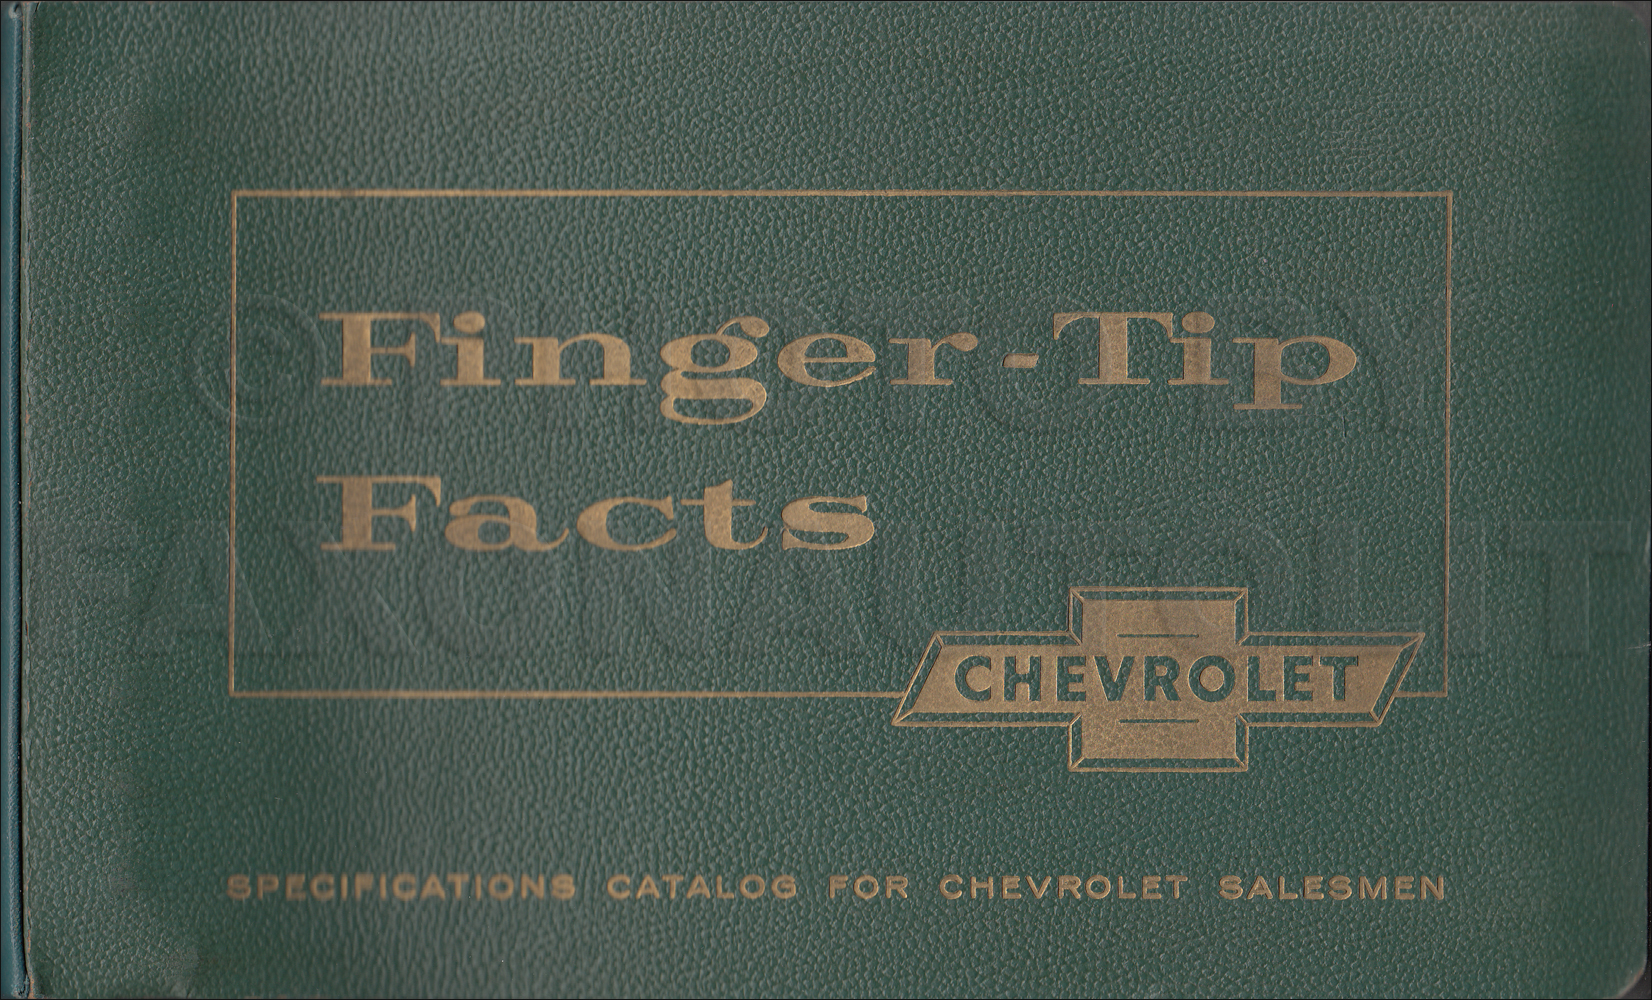 1956 Chevrolet Car Finger Tip Facts Book Dealer Album Original